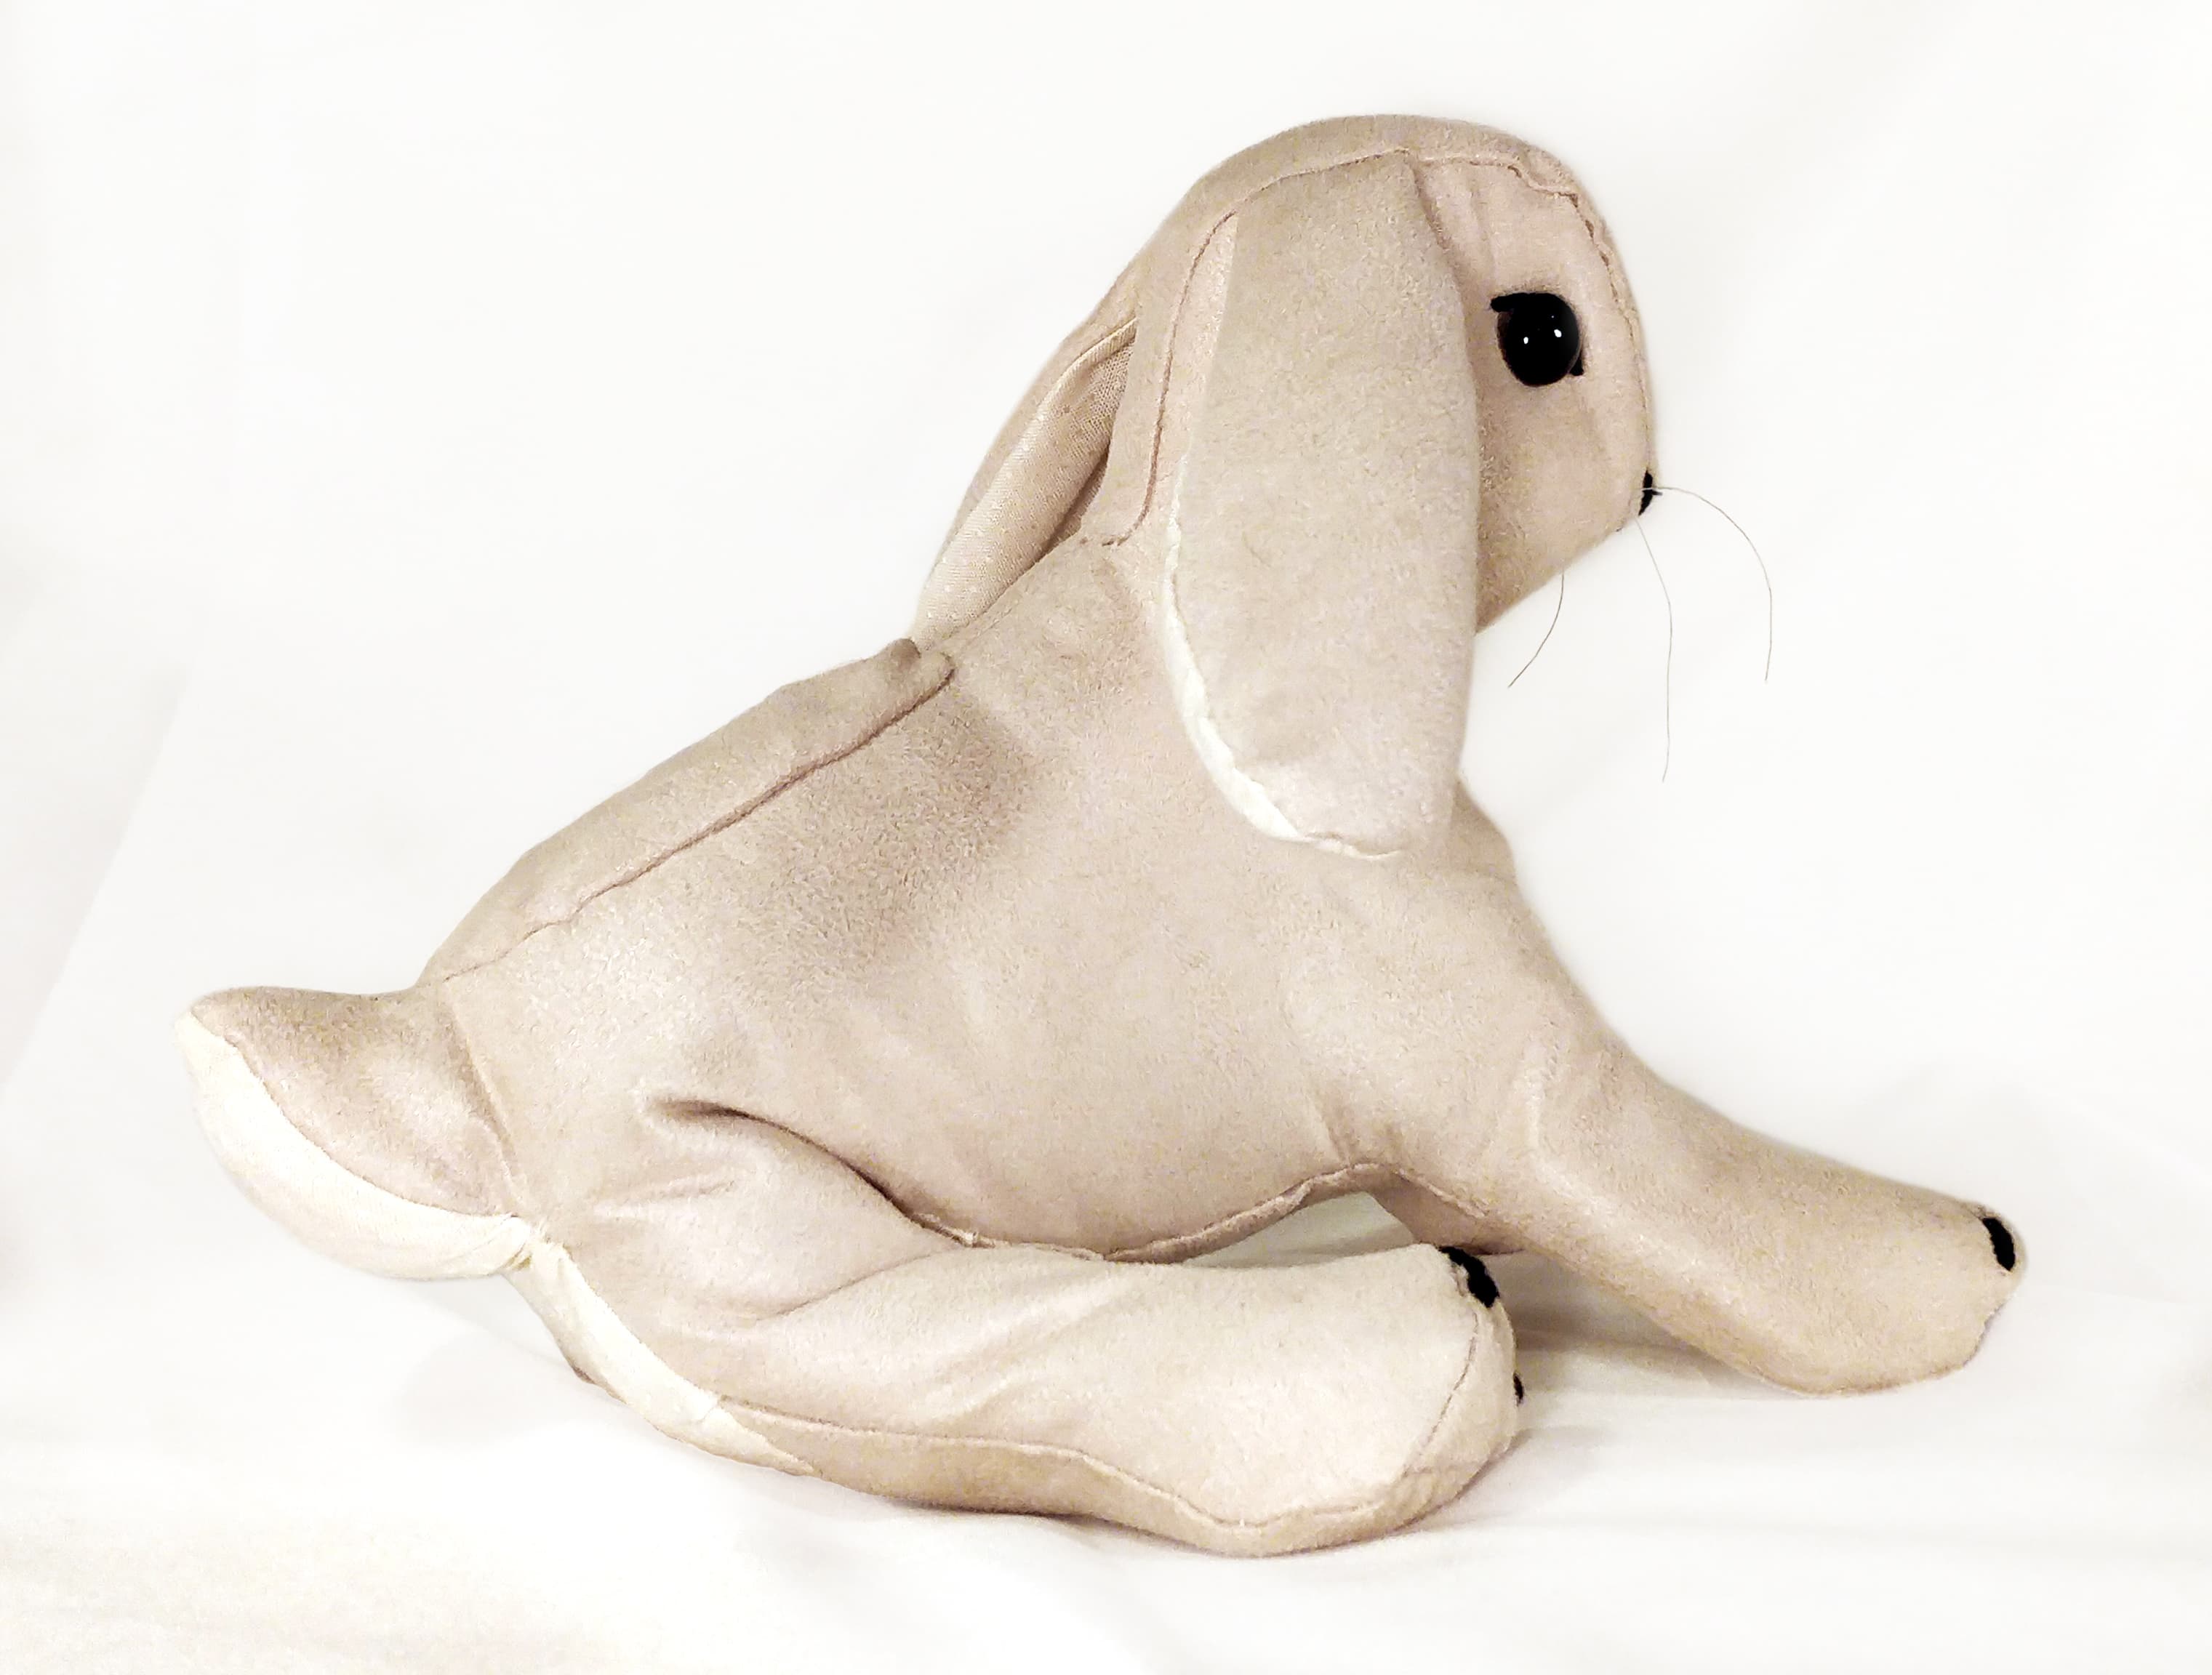 Thumbnail image: A stuffed toy rabbit, posed sitting